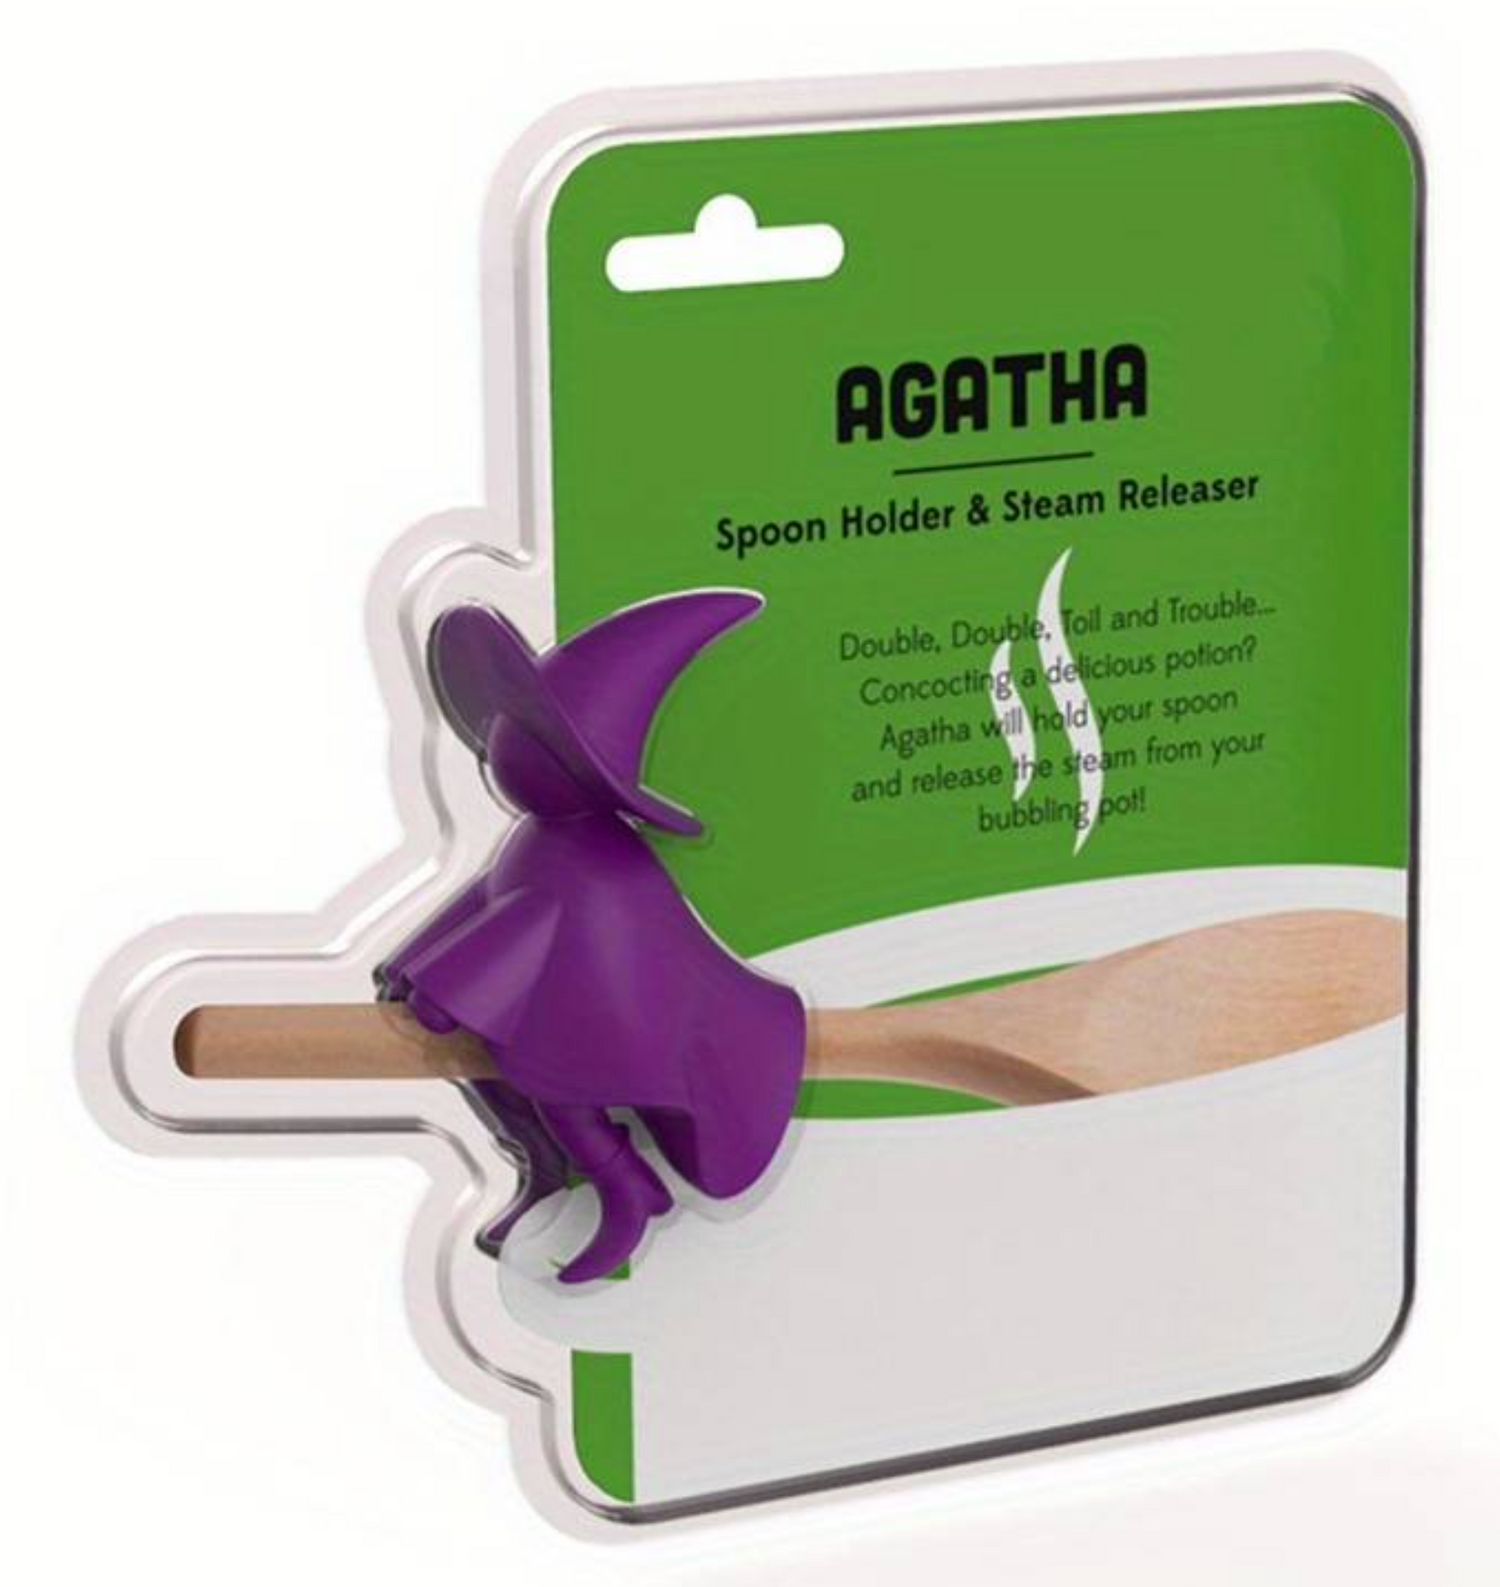 Agatha Spoon holder & steam releaser - Black